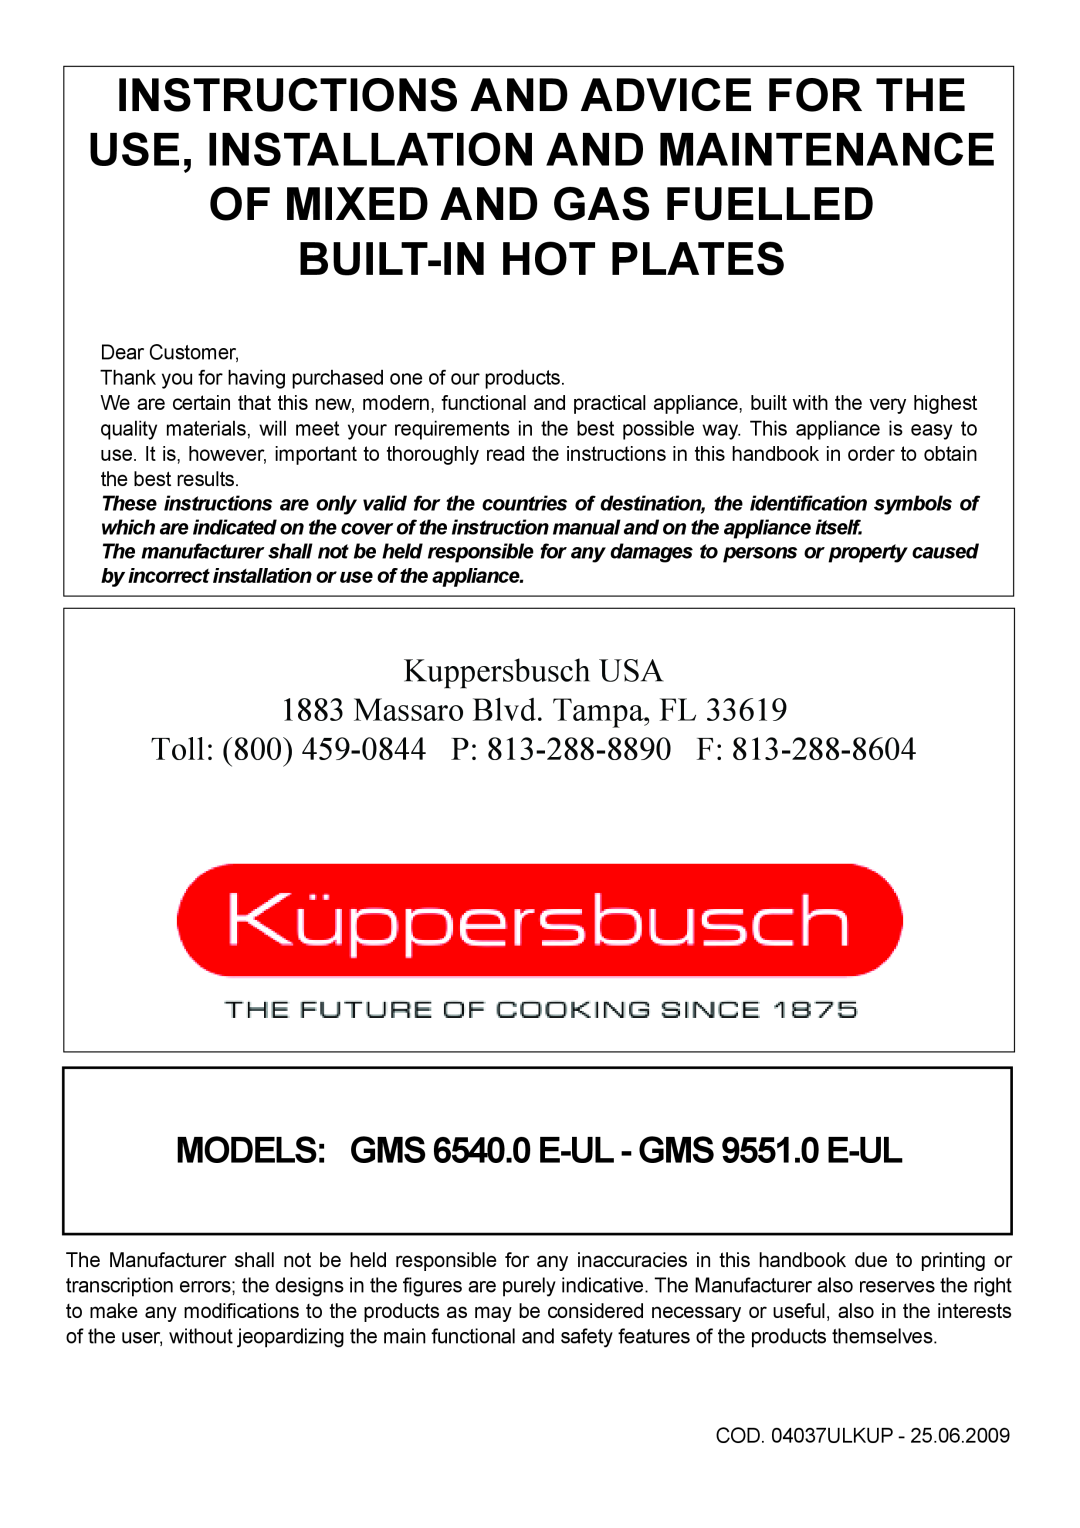 Kuppersbusch USA GMS 9551.0 E-UL, GMS 6540.0 E-UL instruction manual Kuppersbusch USA 1883 Massaro Blvd. Tampa, FL 